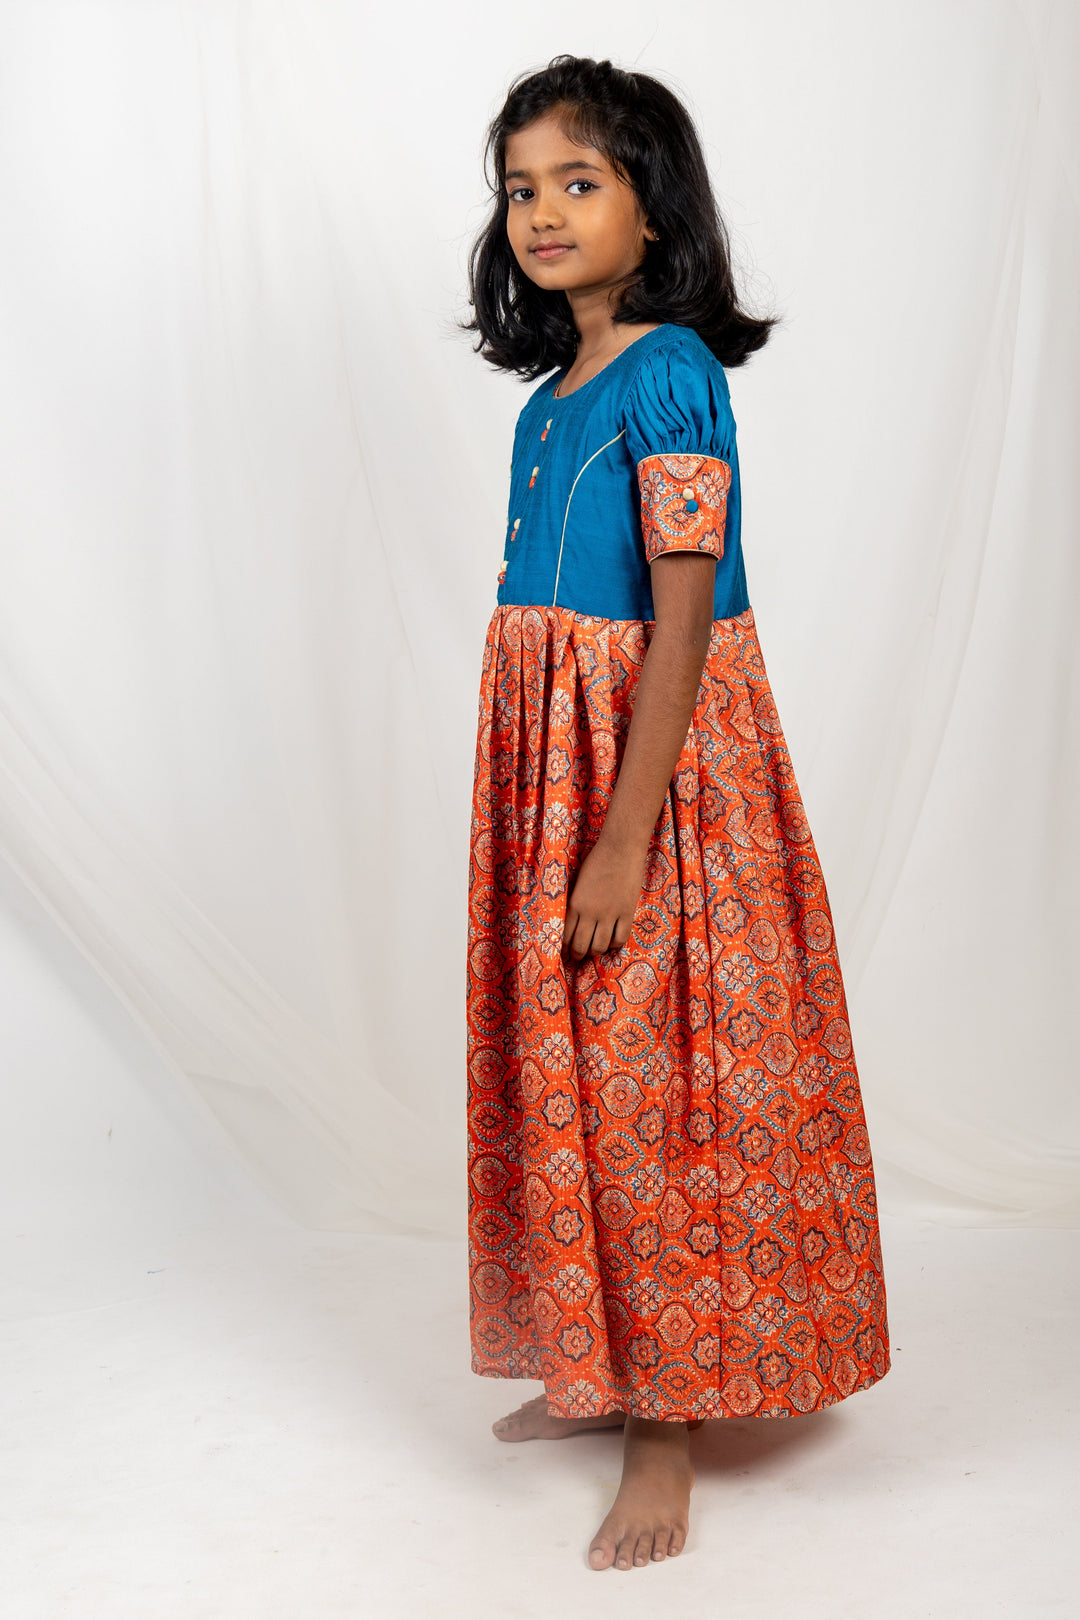 The Nesavu Kids Anarkali Latest Blue With Orange Designer Silk Frock For Girls With Embellishments psr silks Nesavu 16 (1Y) / Coral GA085